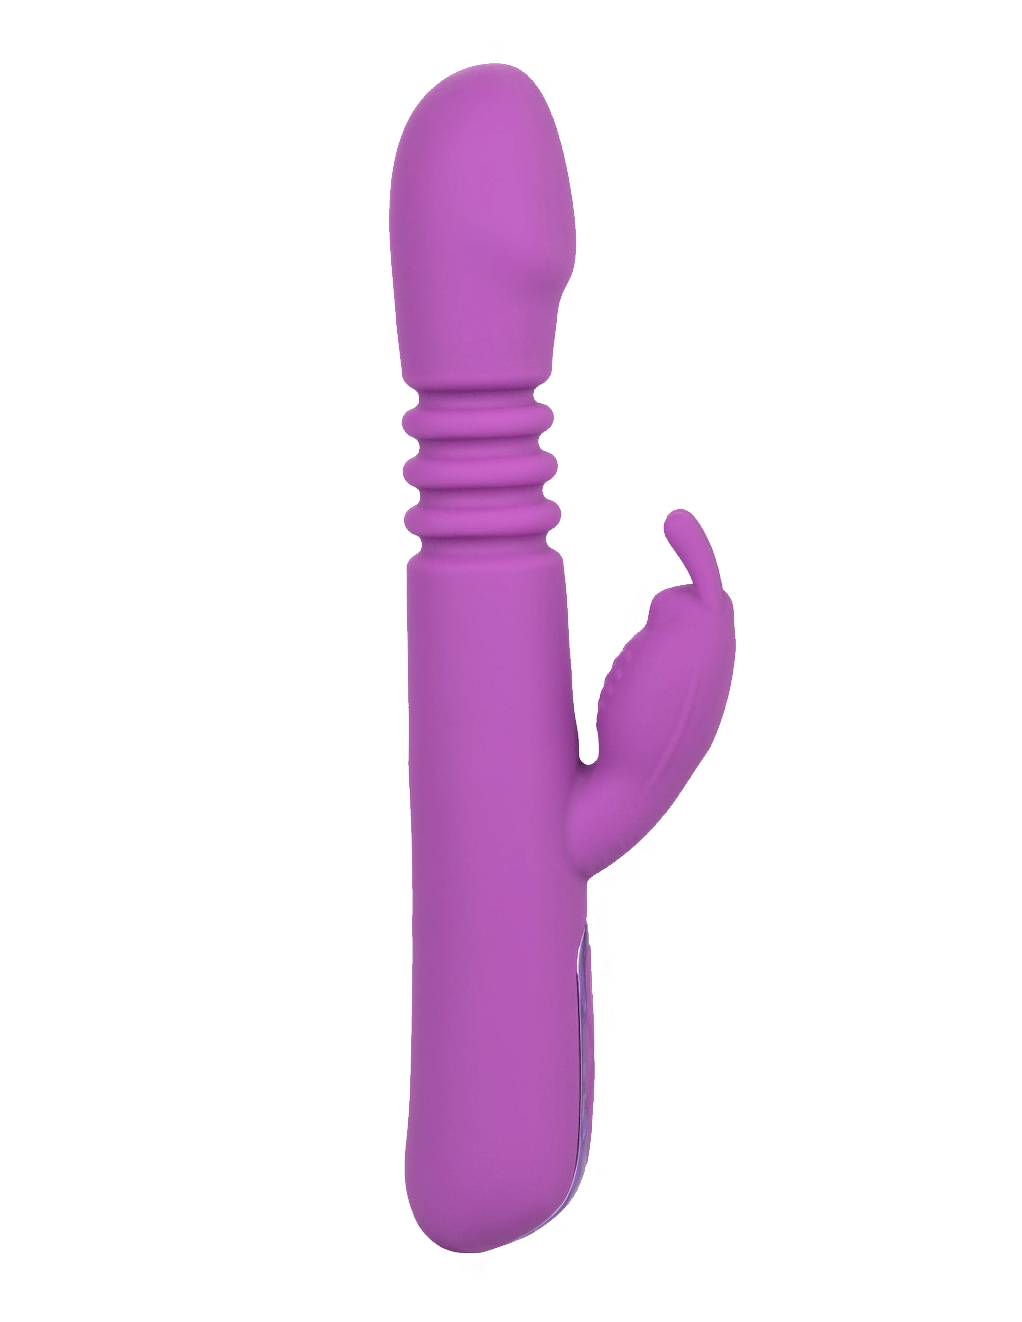 Jack Rabbit Elite Thrusting Rabbit Vibrator - Purple - Side